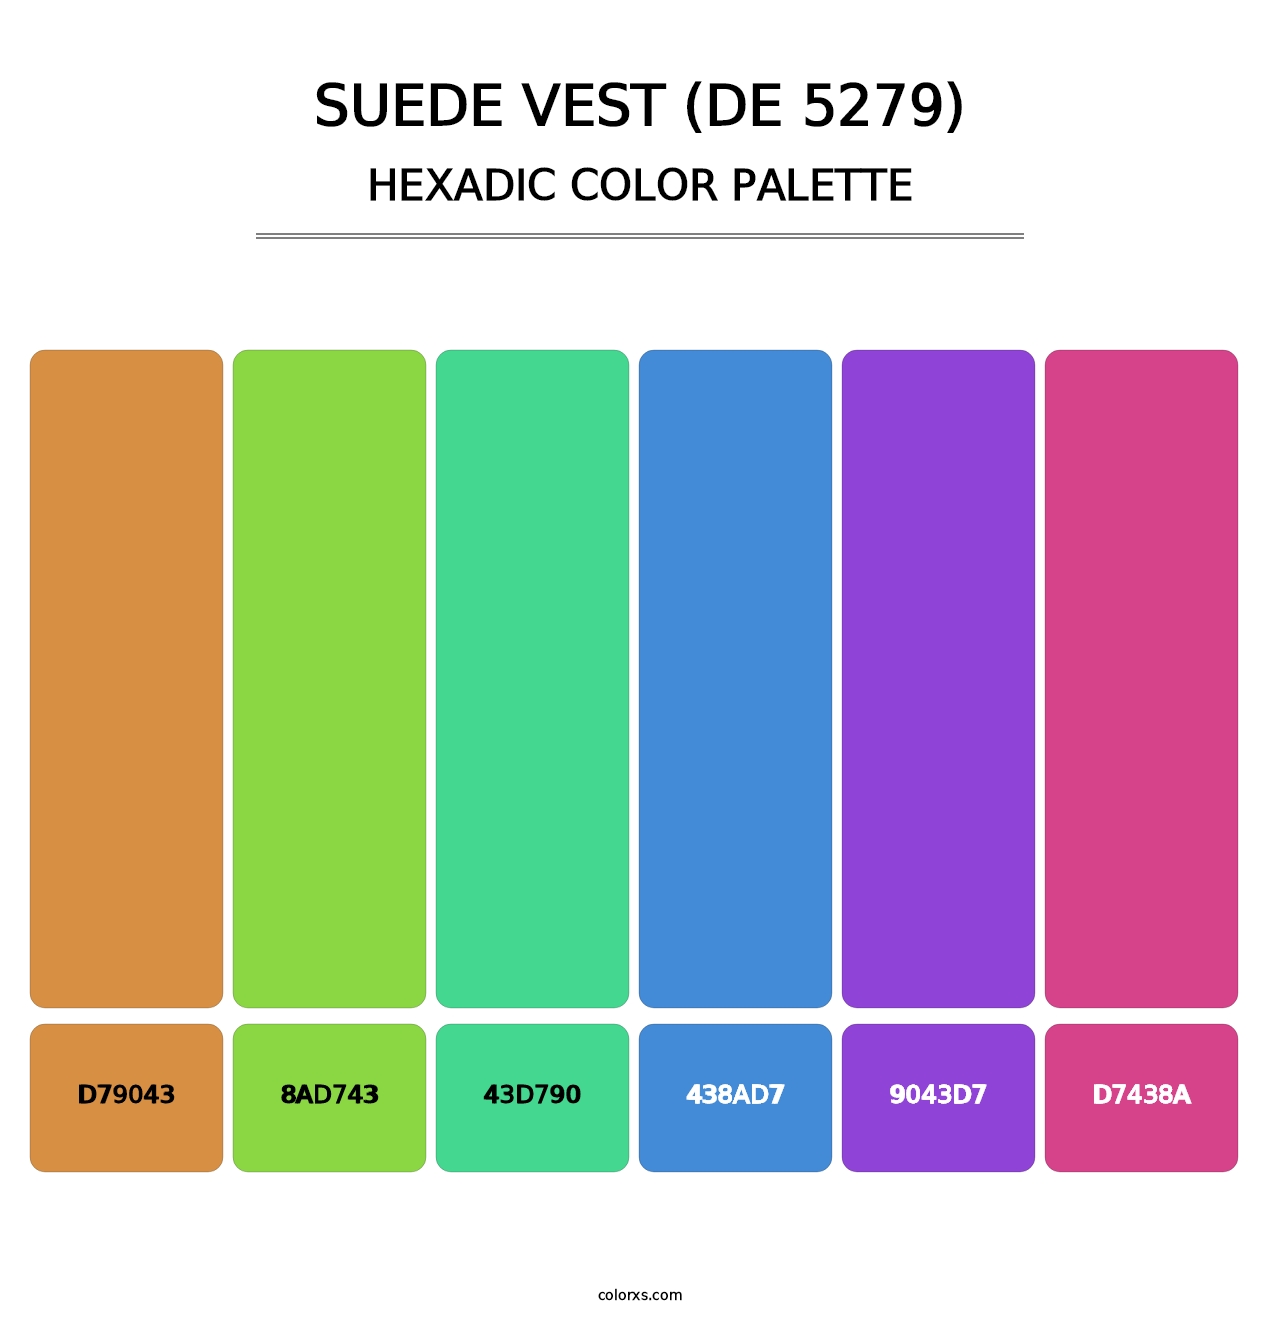 Suede Vest (DE 5279) - Hexadic Color Palette